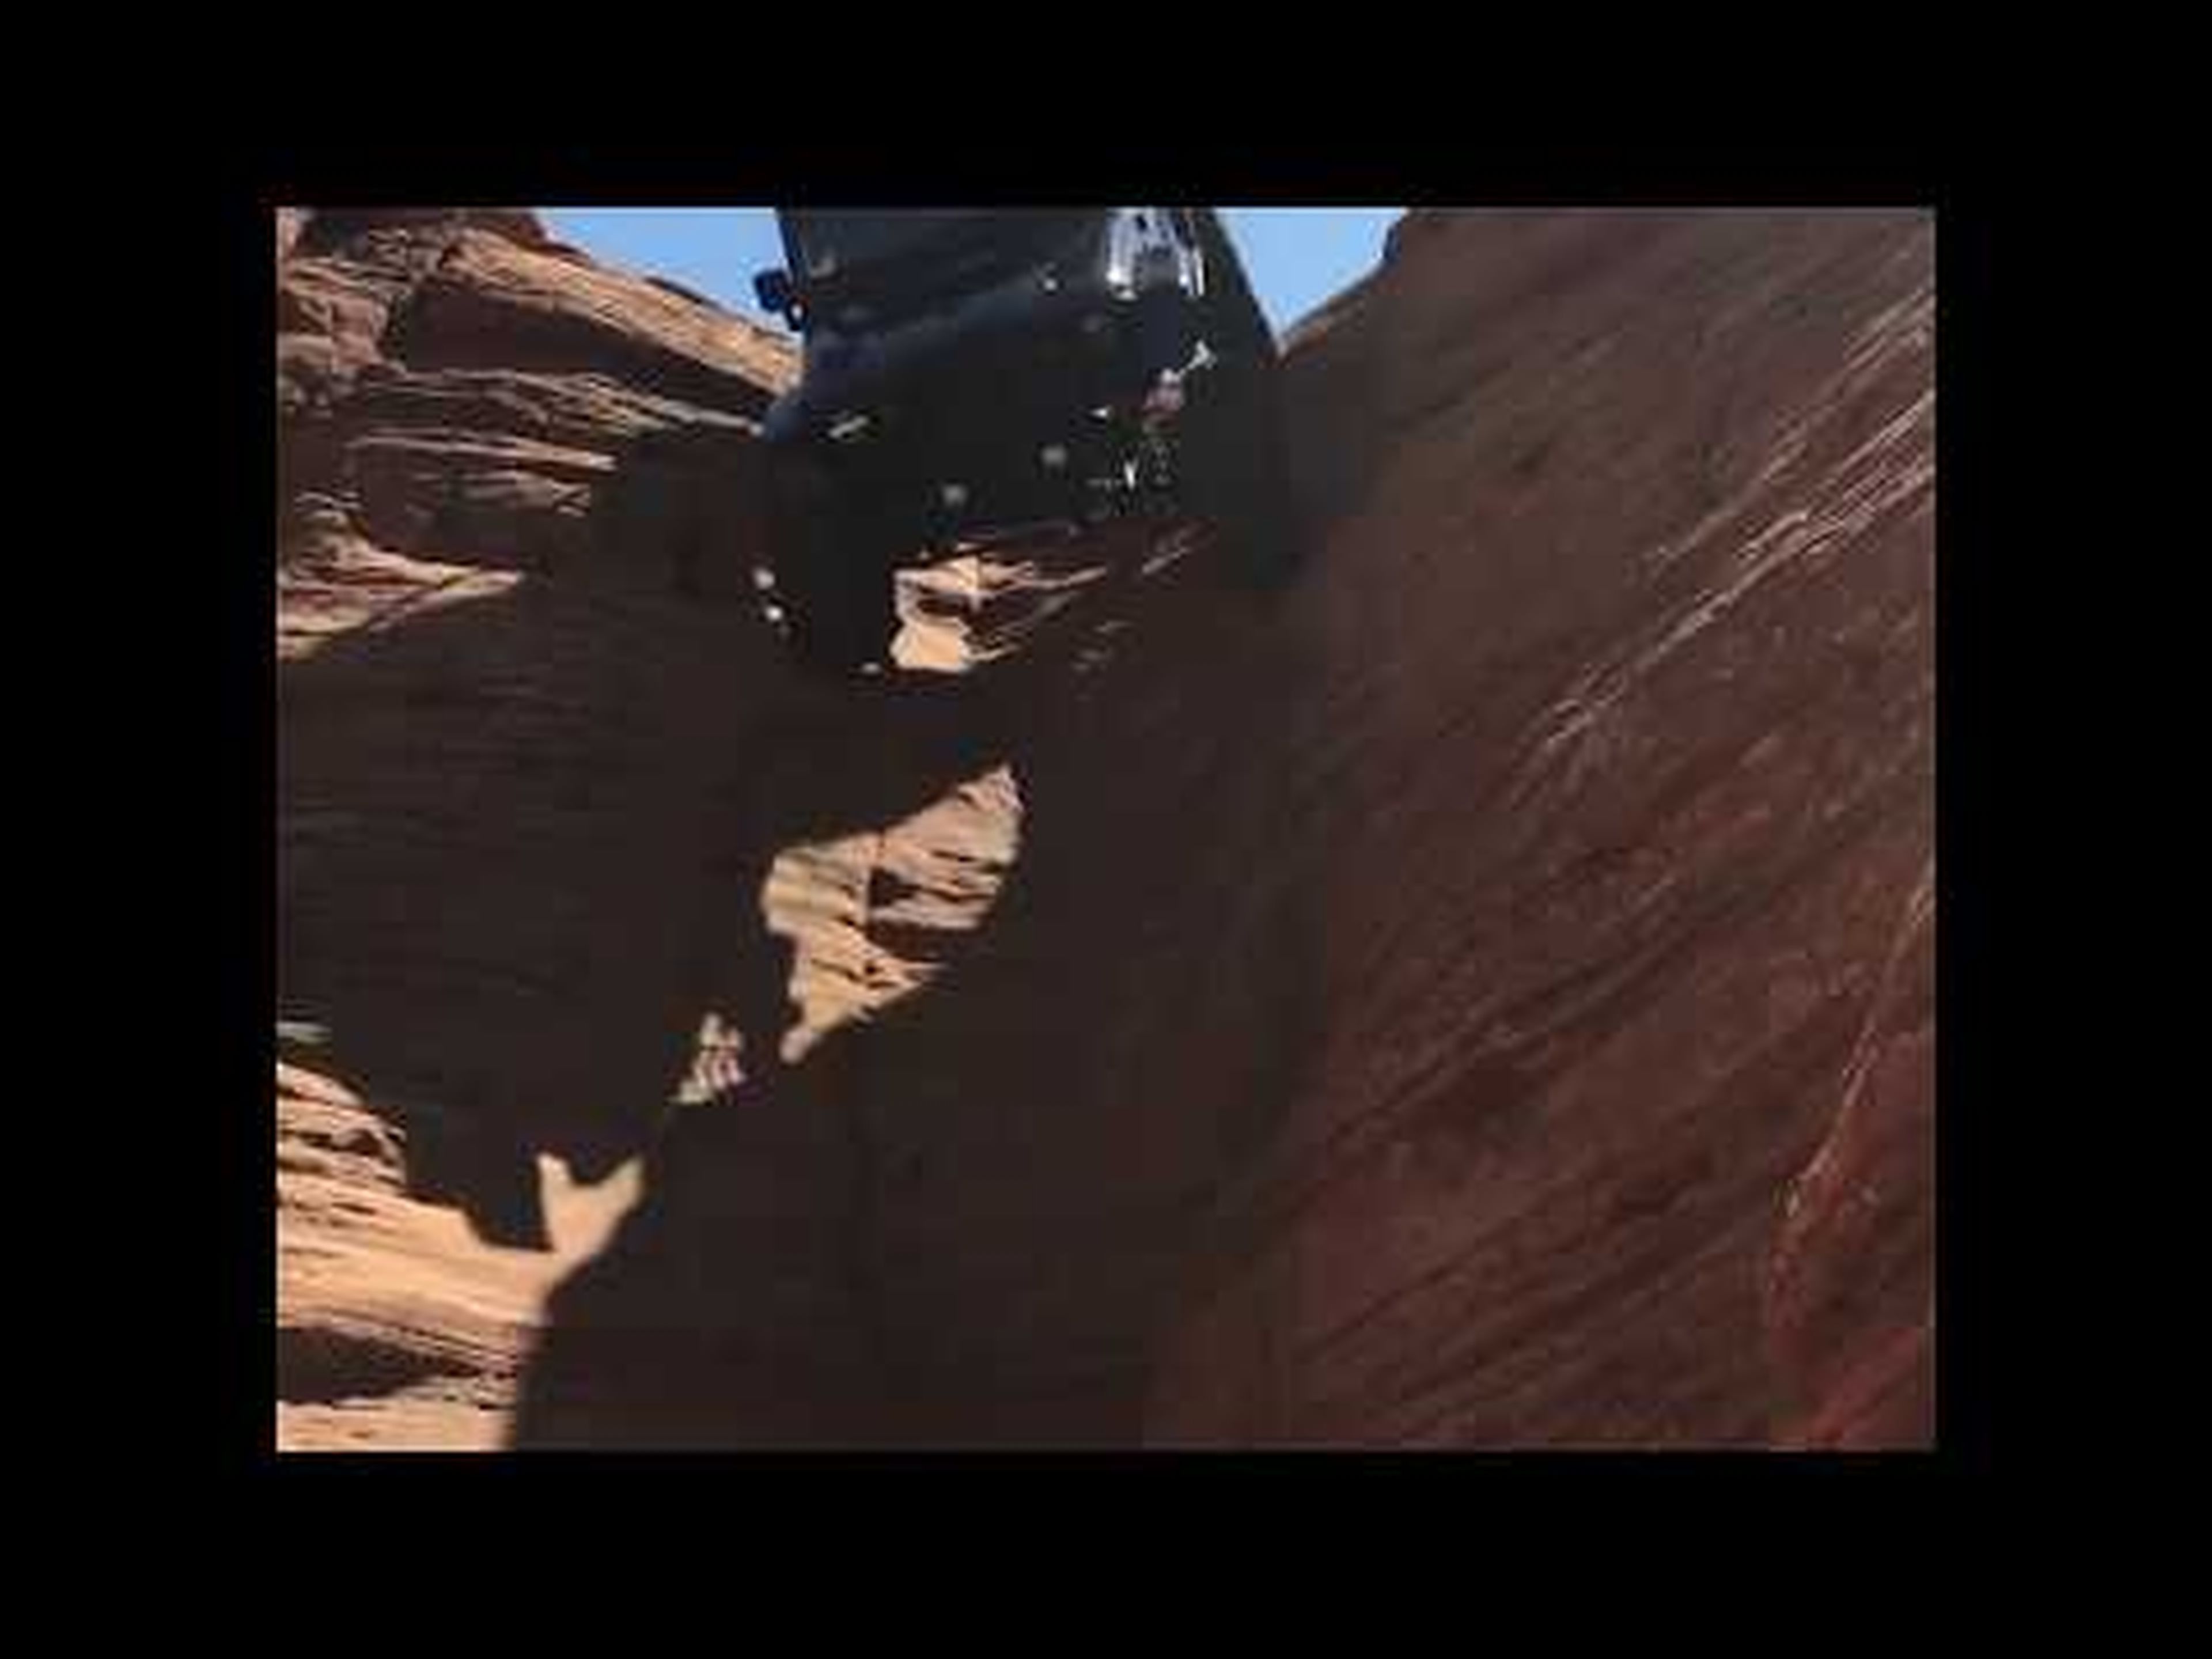 Jeep Drives Down Vertical Chute